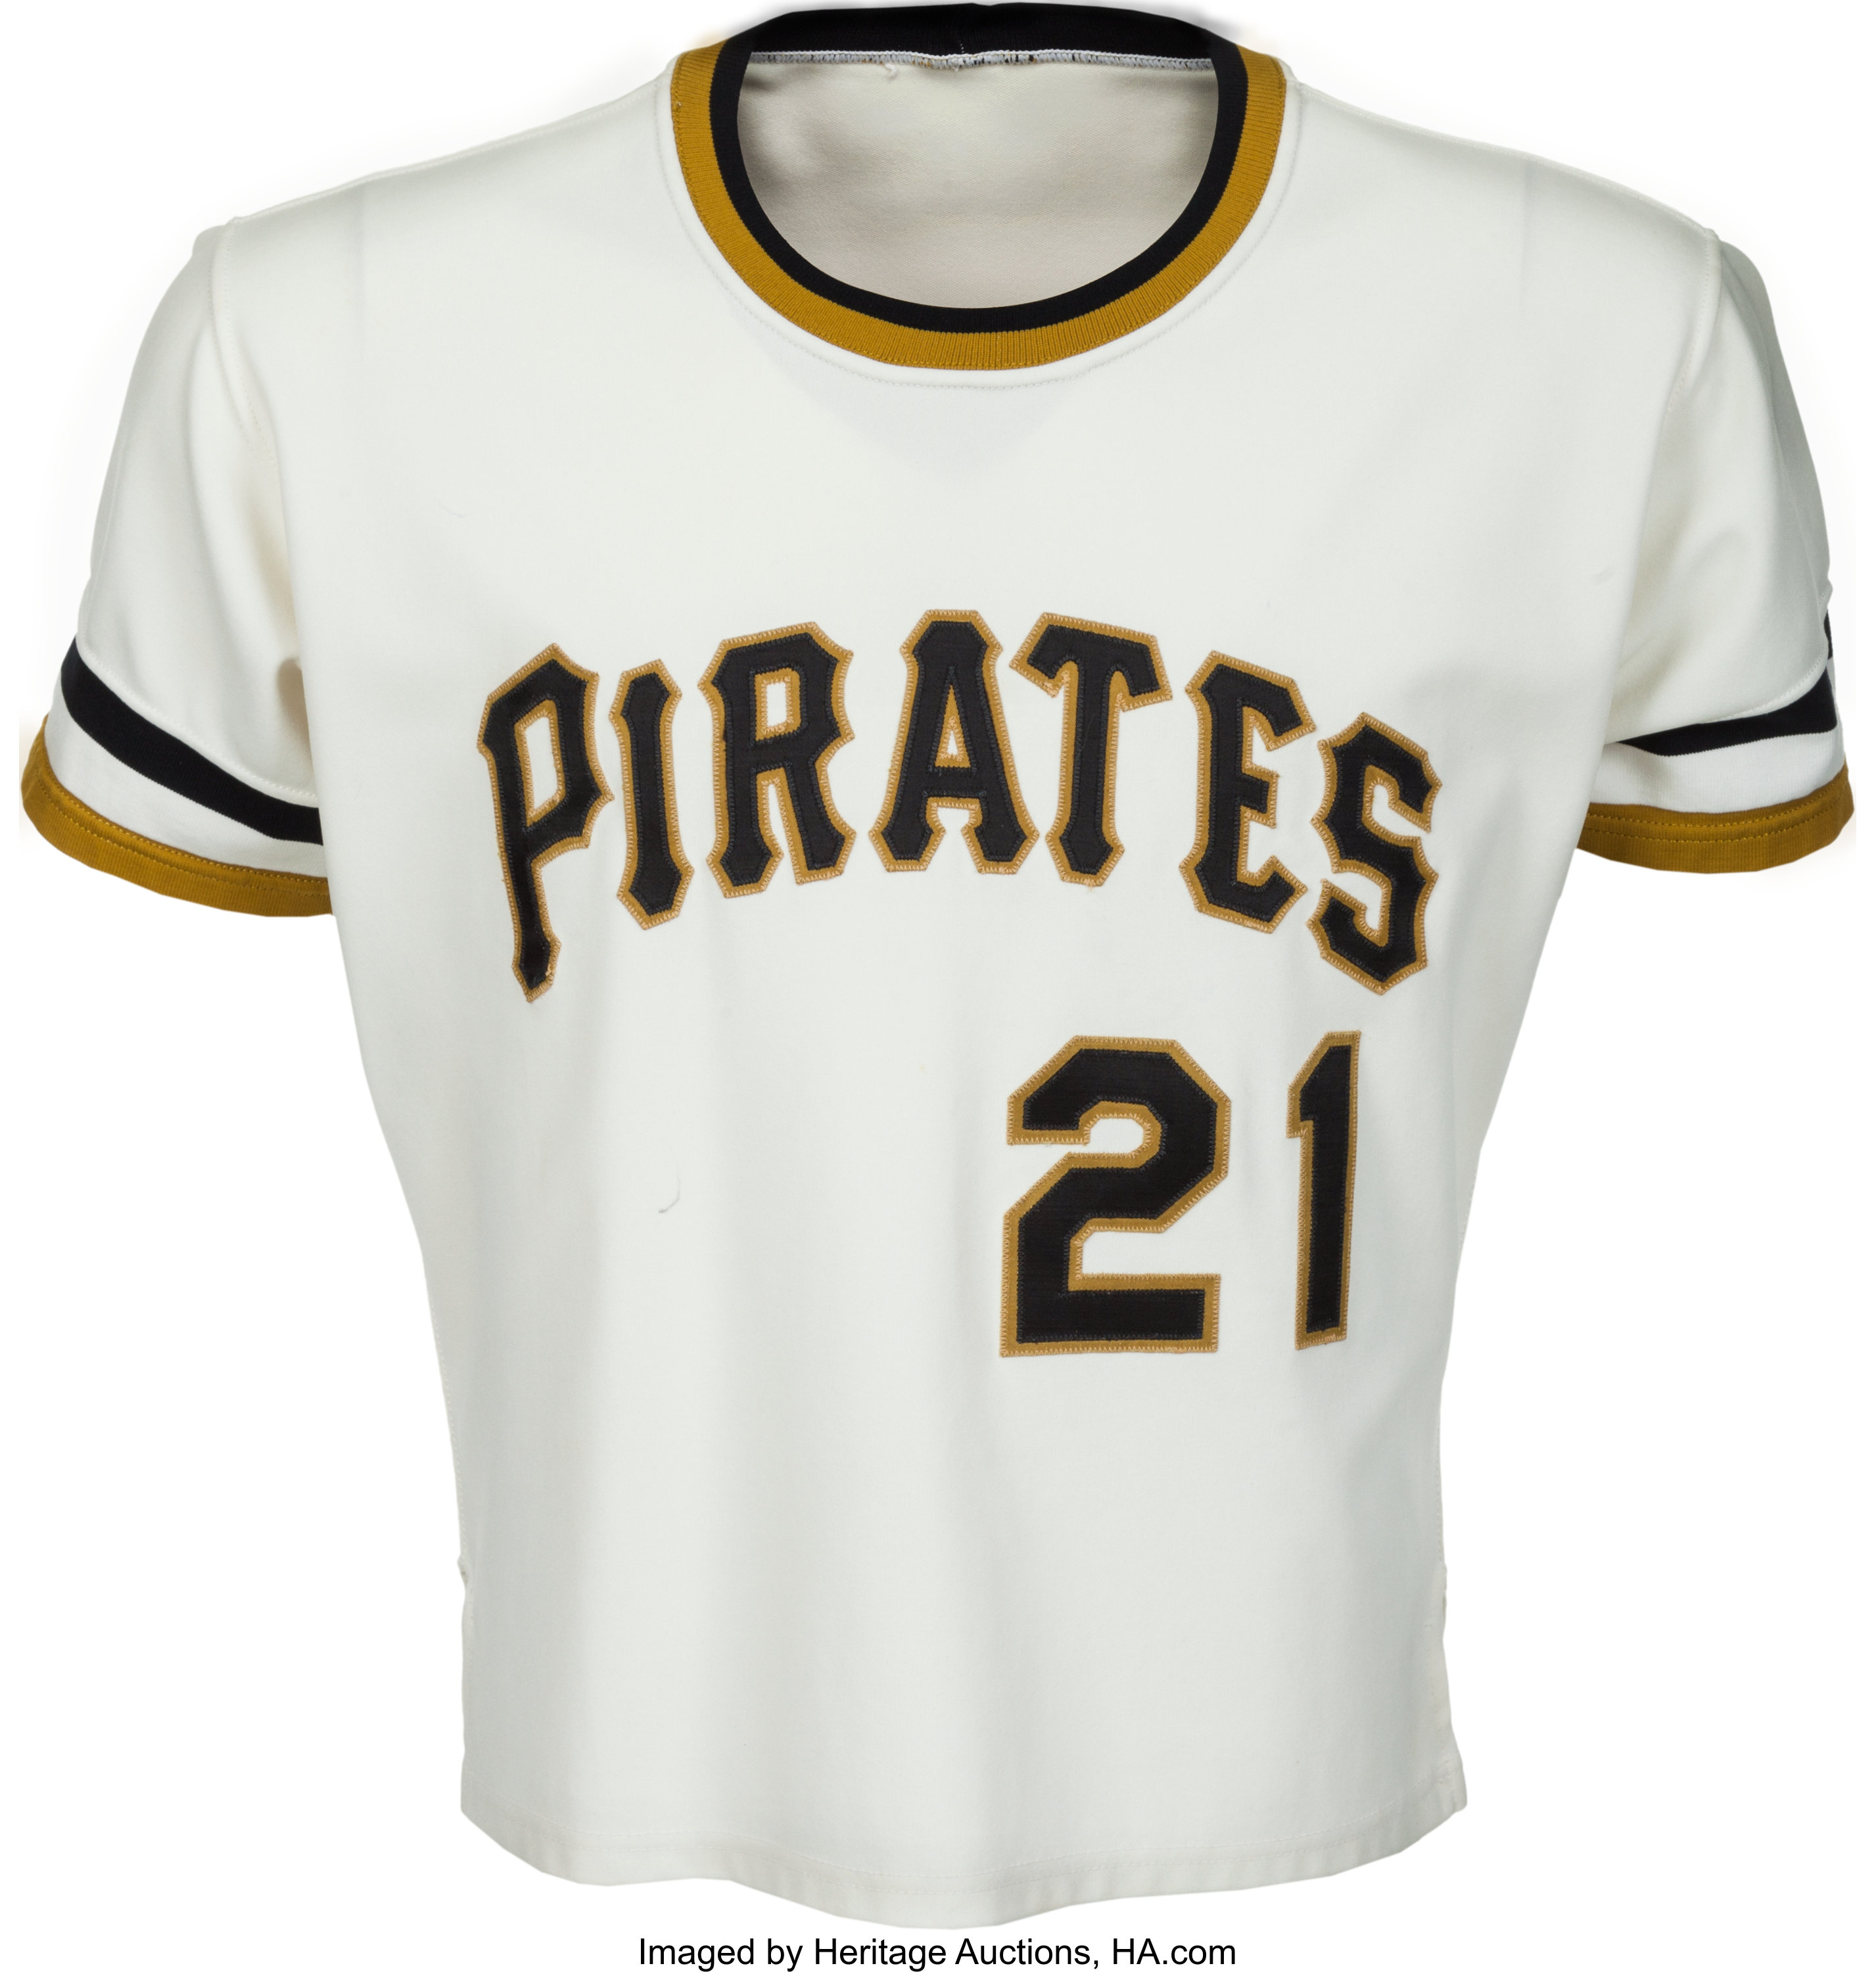 Baseball Jersey worn by Pittsburgh Pirate Roberto Clemente